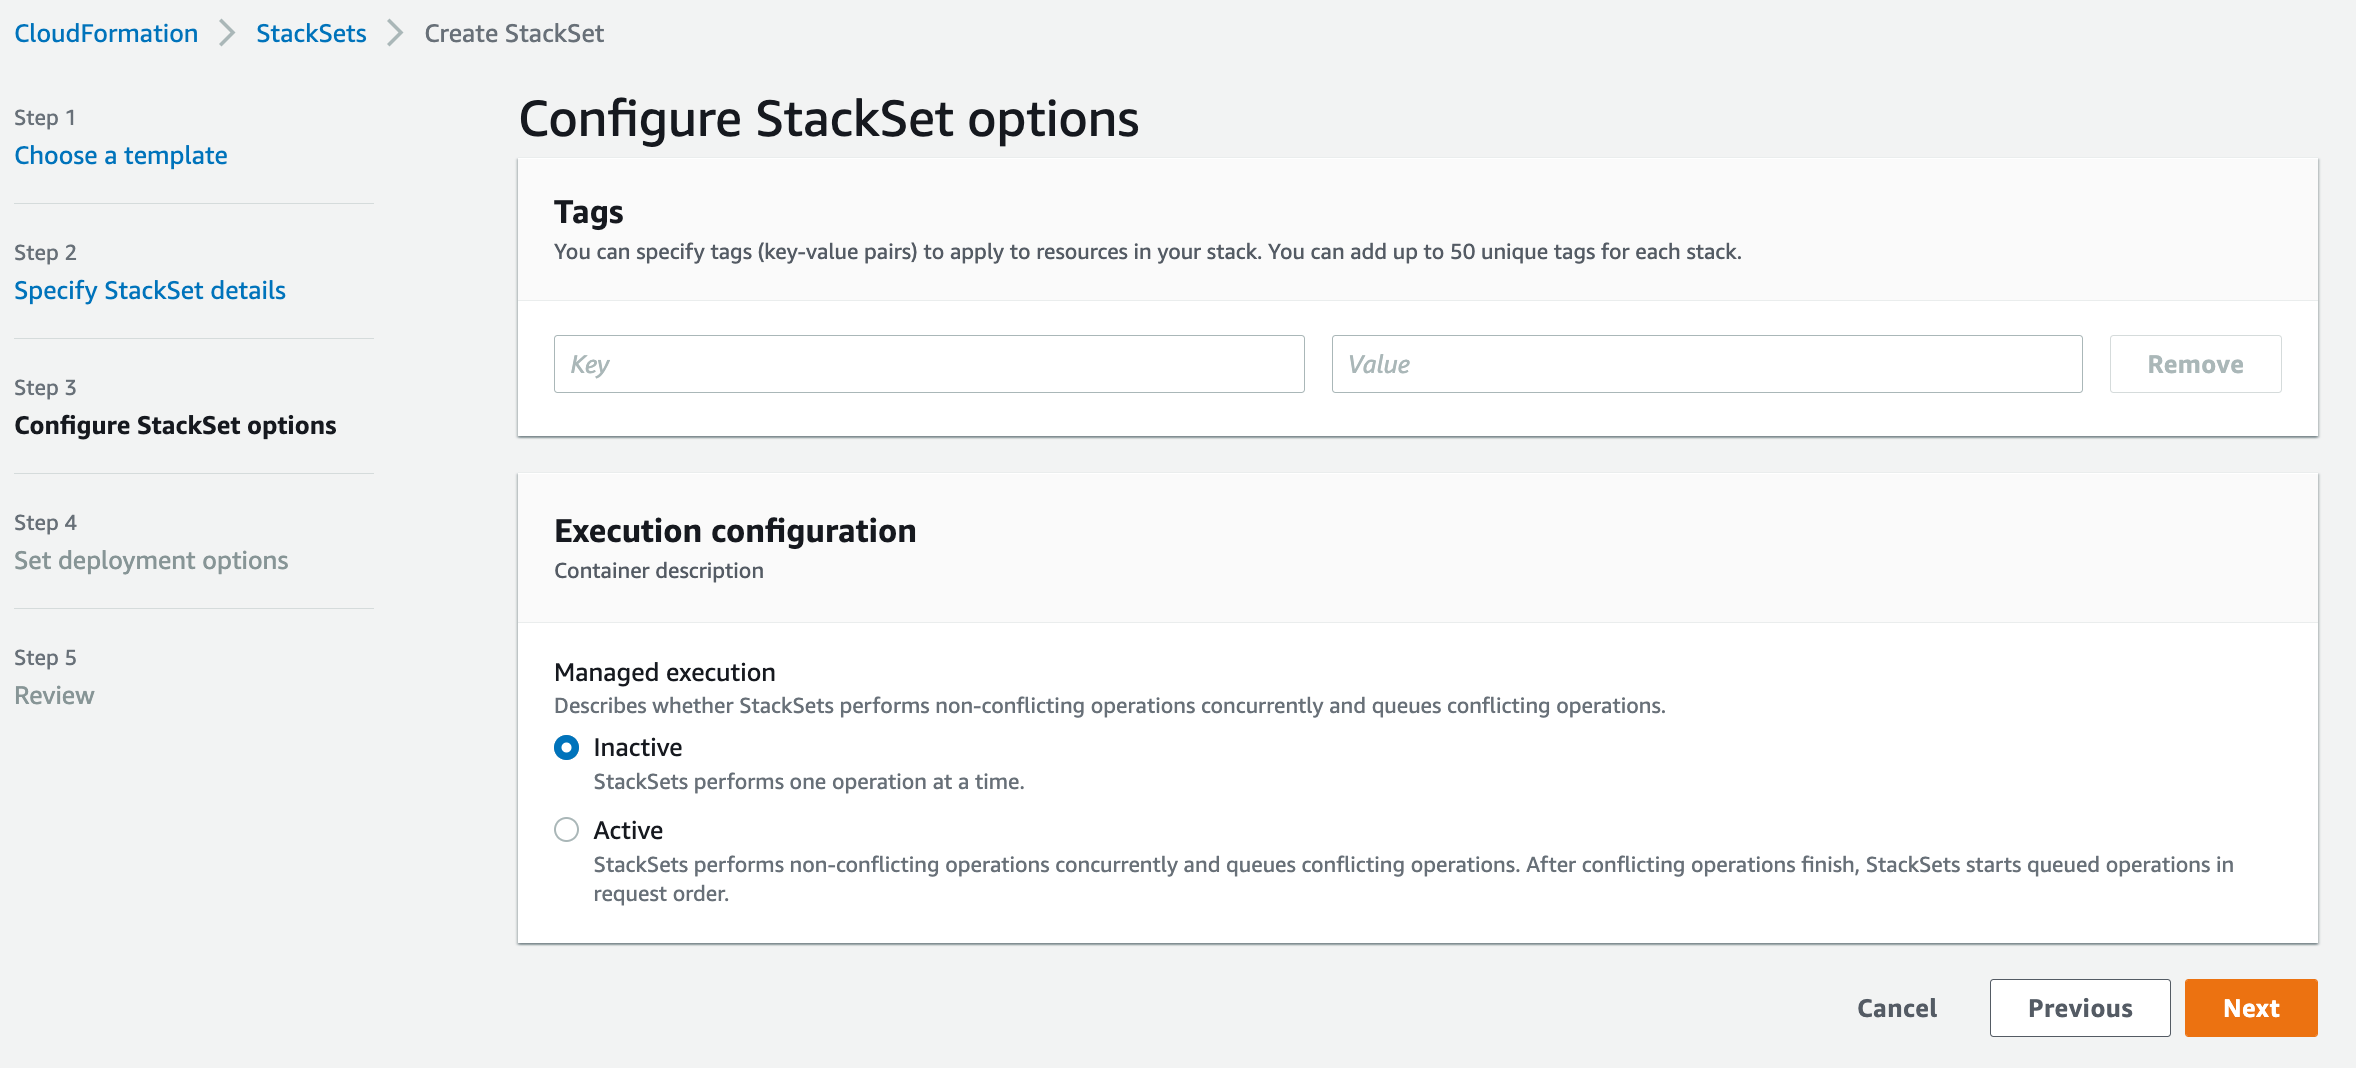 Configure StackSet options